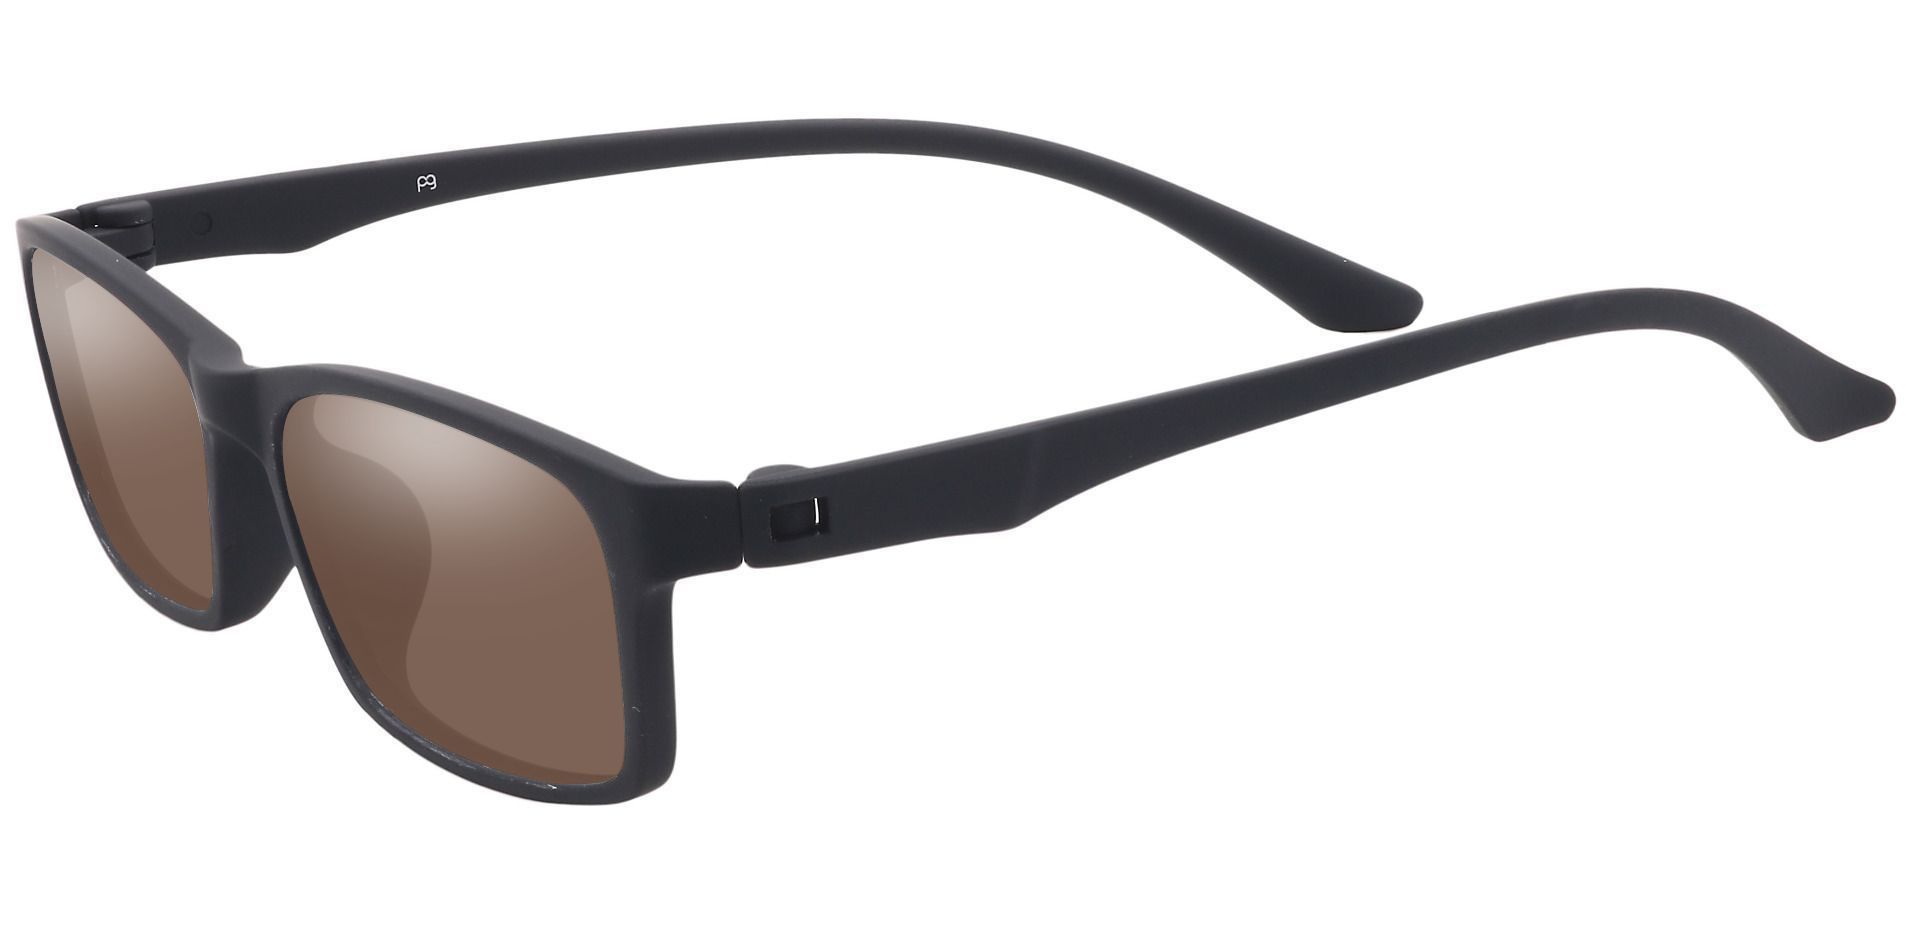 Poplar Rectangle Prescription Sunglasses - Black Frame With Brown Lenses